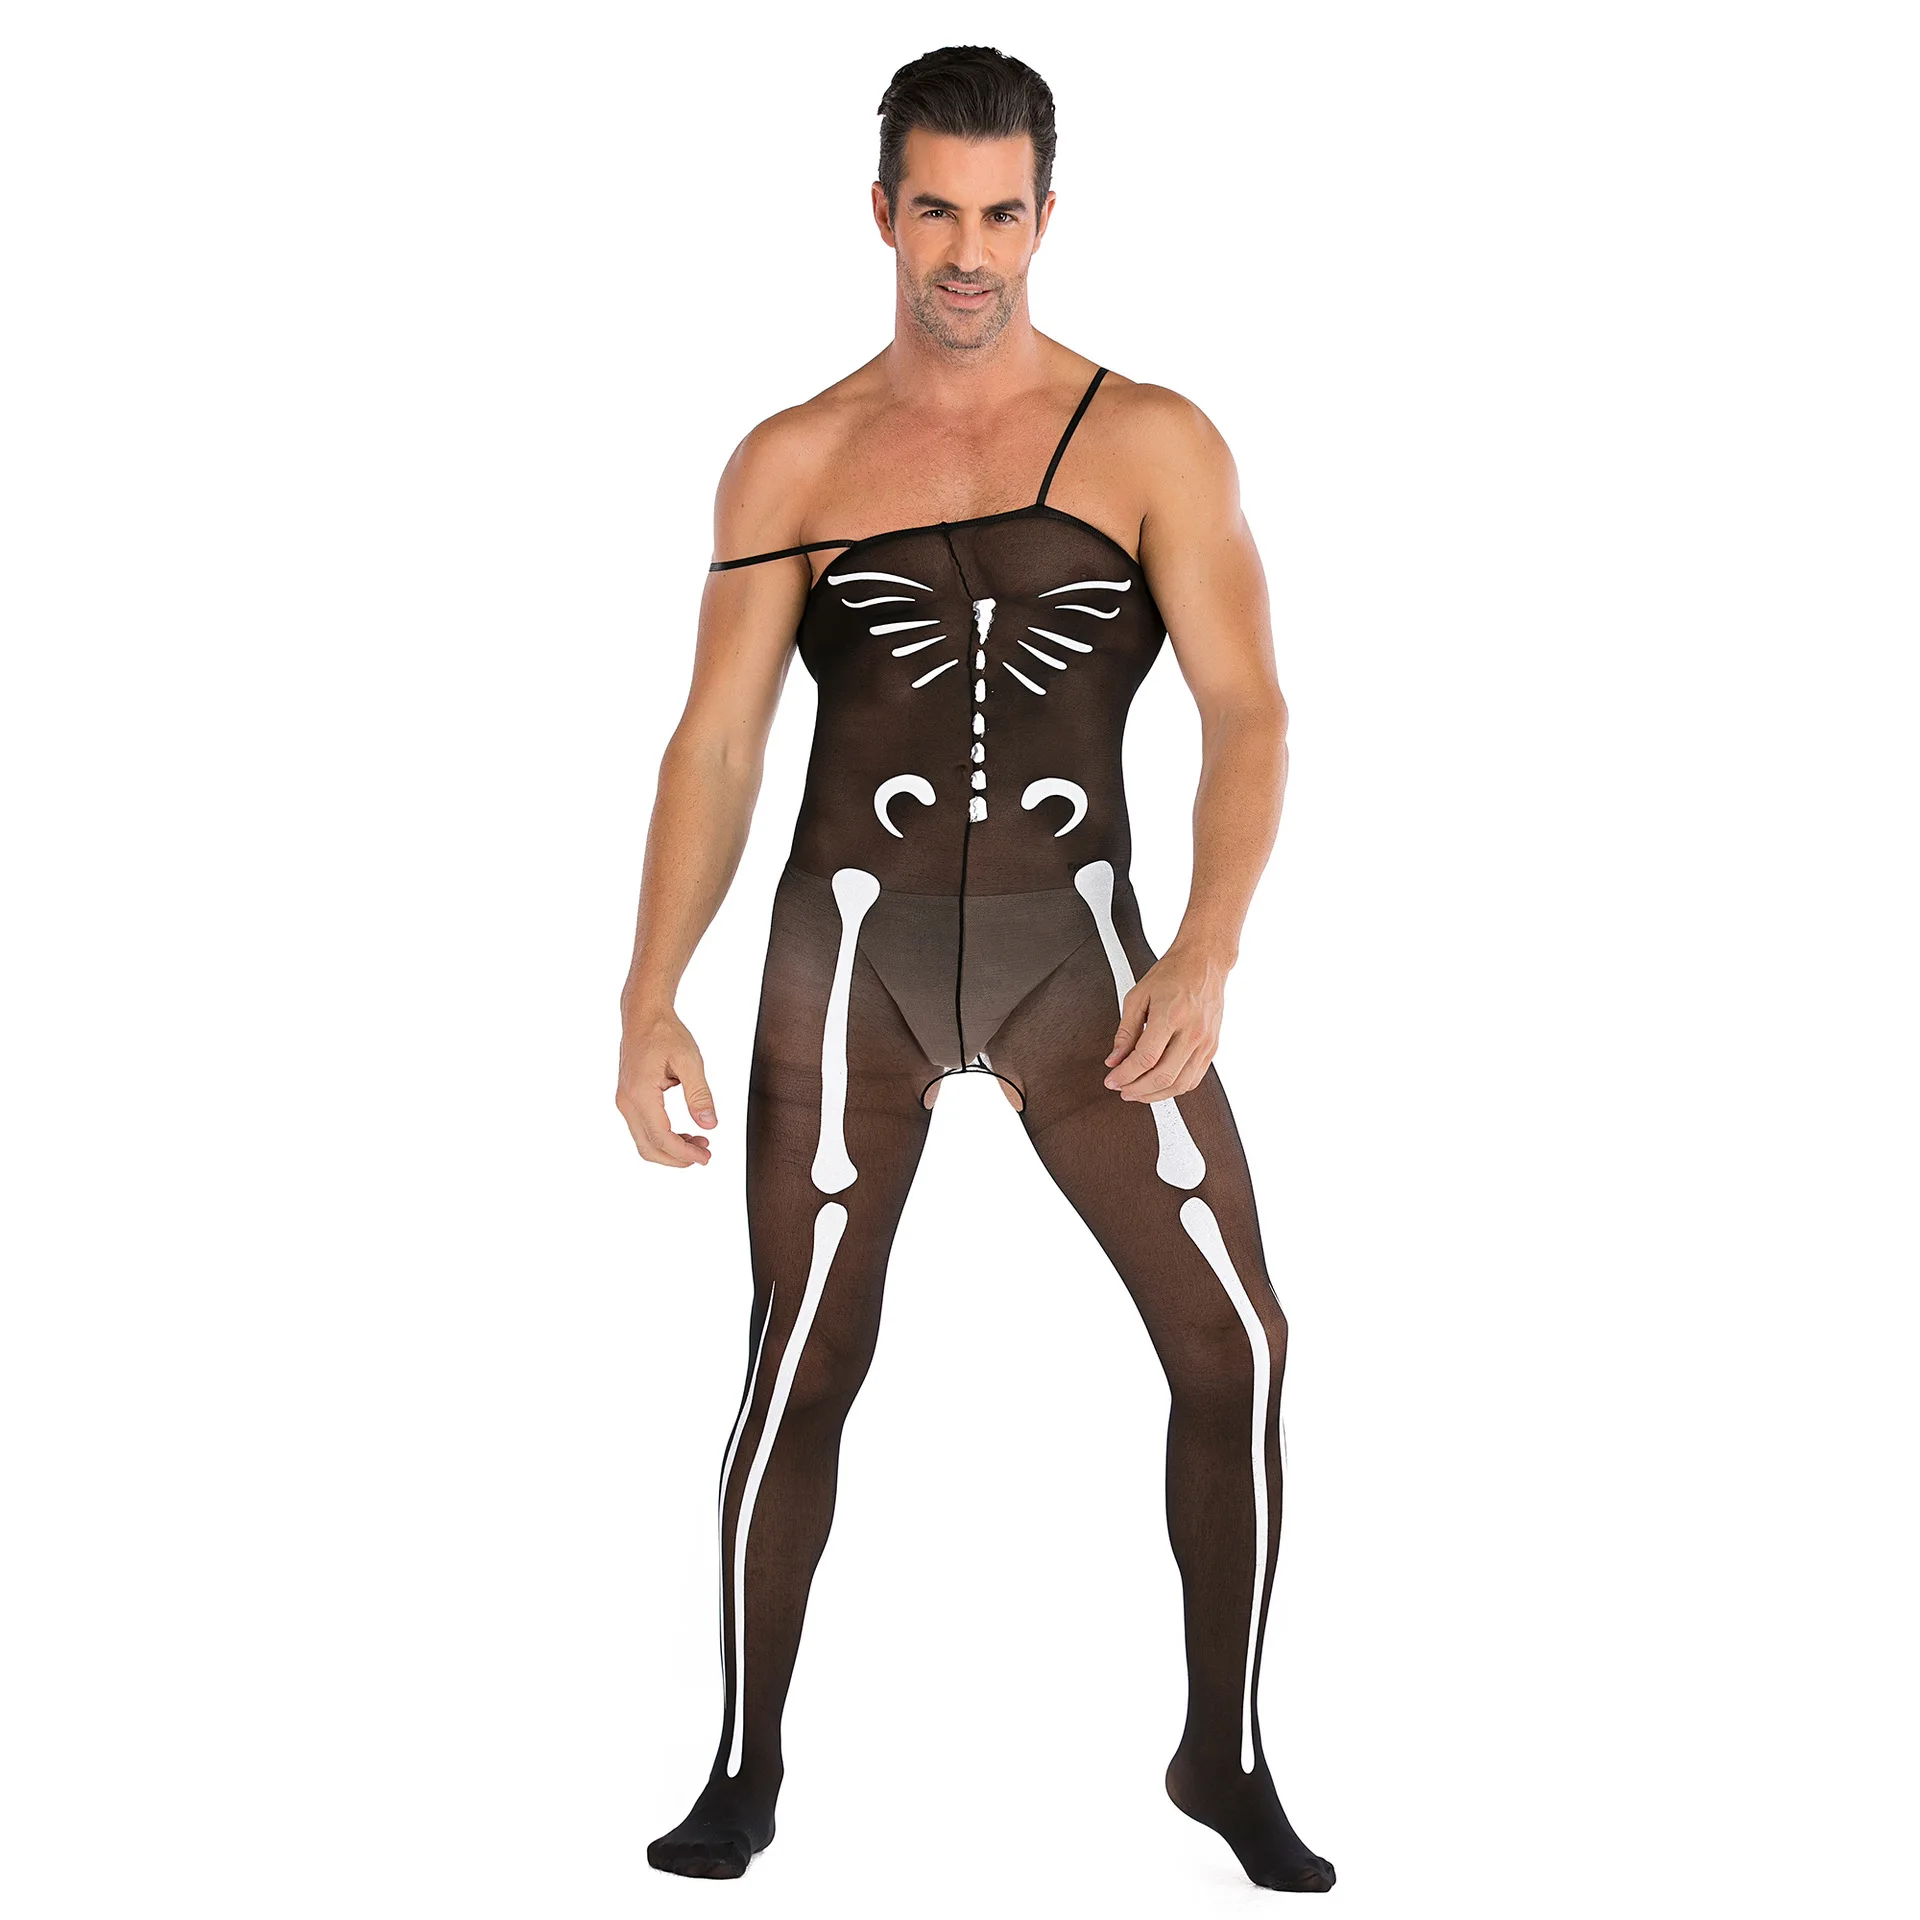 

Man Fashion Sexy Lingerie Hot Open Crotch Sex Costumes Black Mesh Teddy Bodysuit Intimate Porno Men Elastic Underwear Stockings